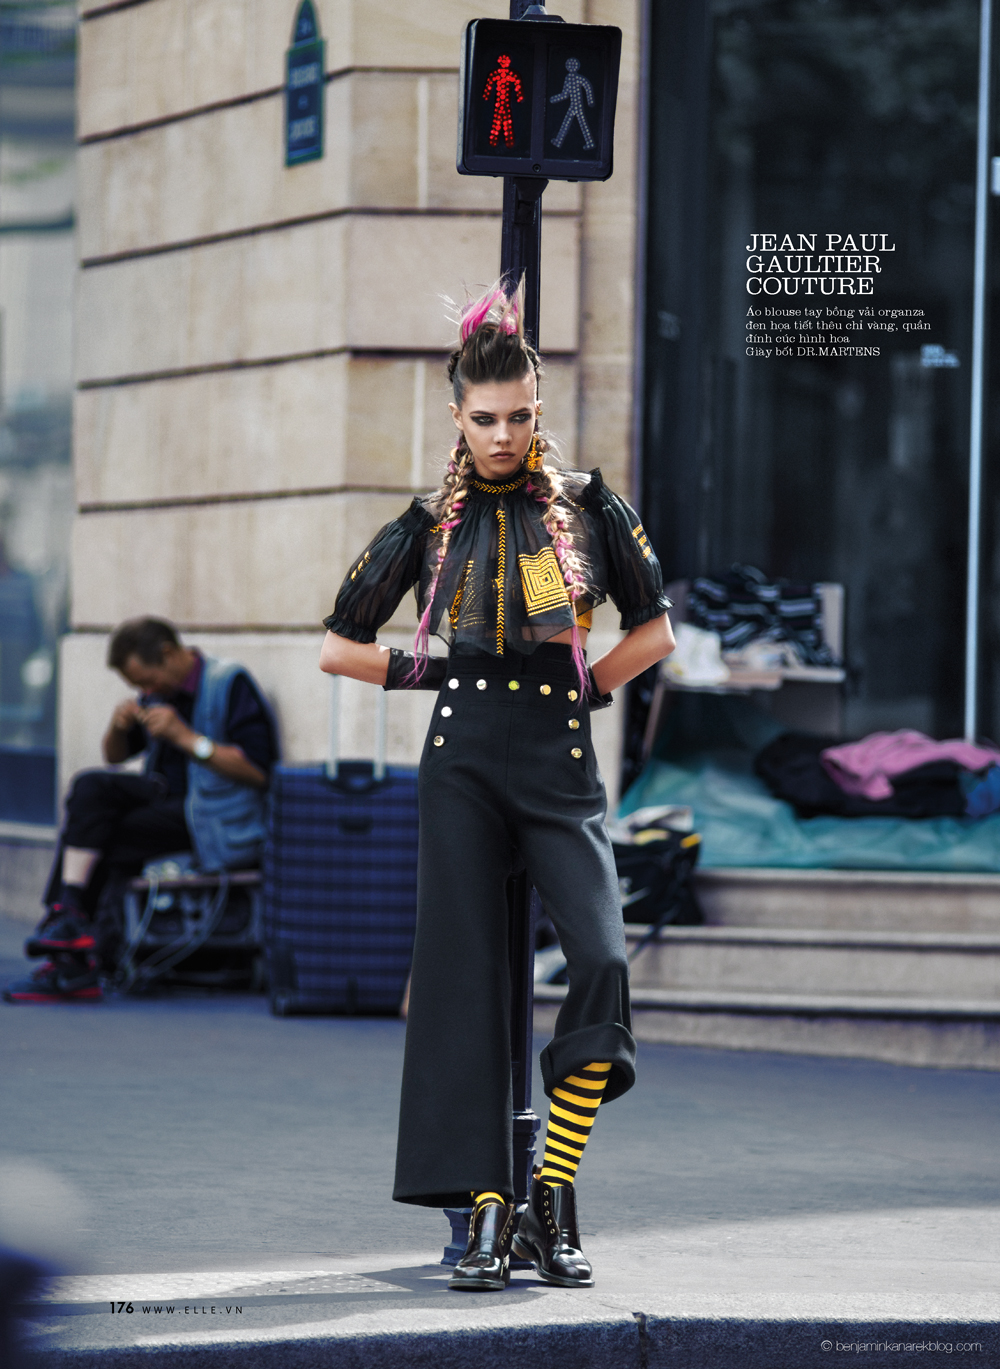 Léa Julian in Jean Paul Gaultier Haute Couture @ Benjamin Kanarek